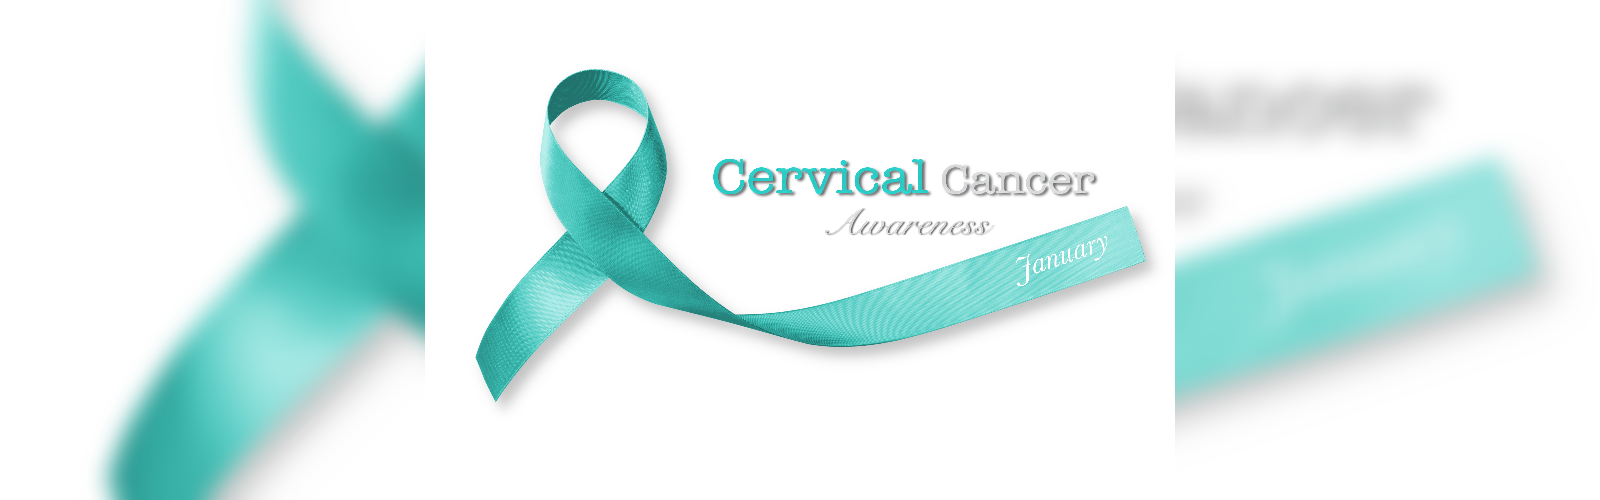 Cervical Cancer Awareness 
January